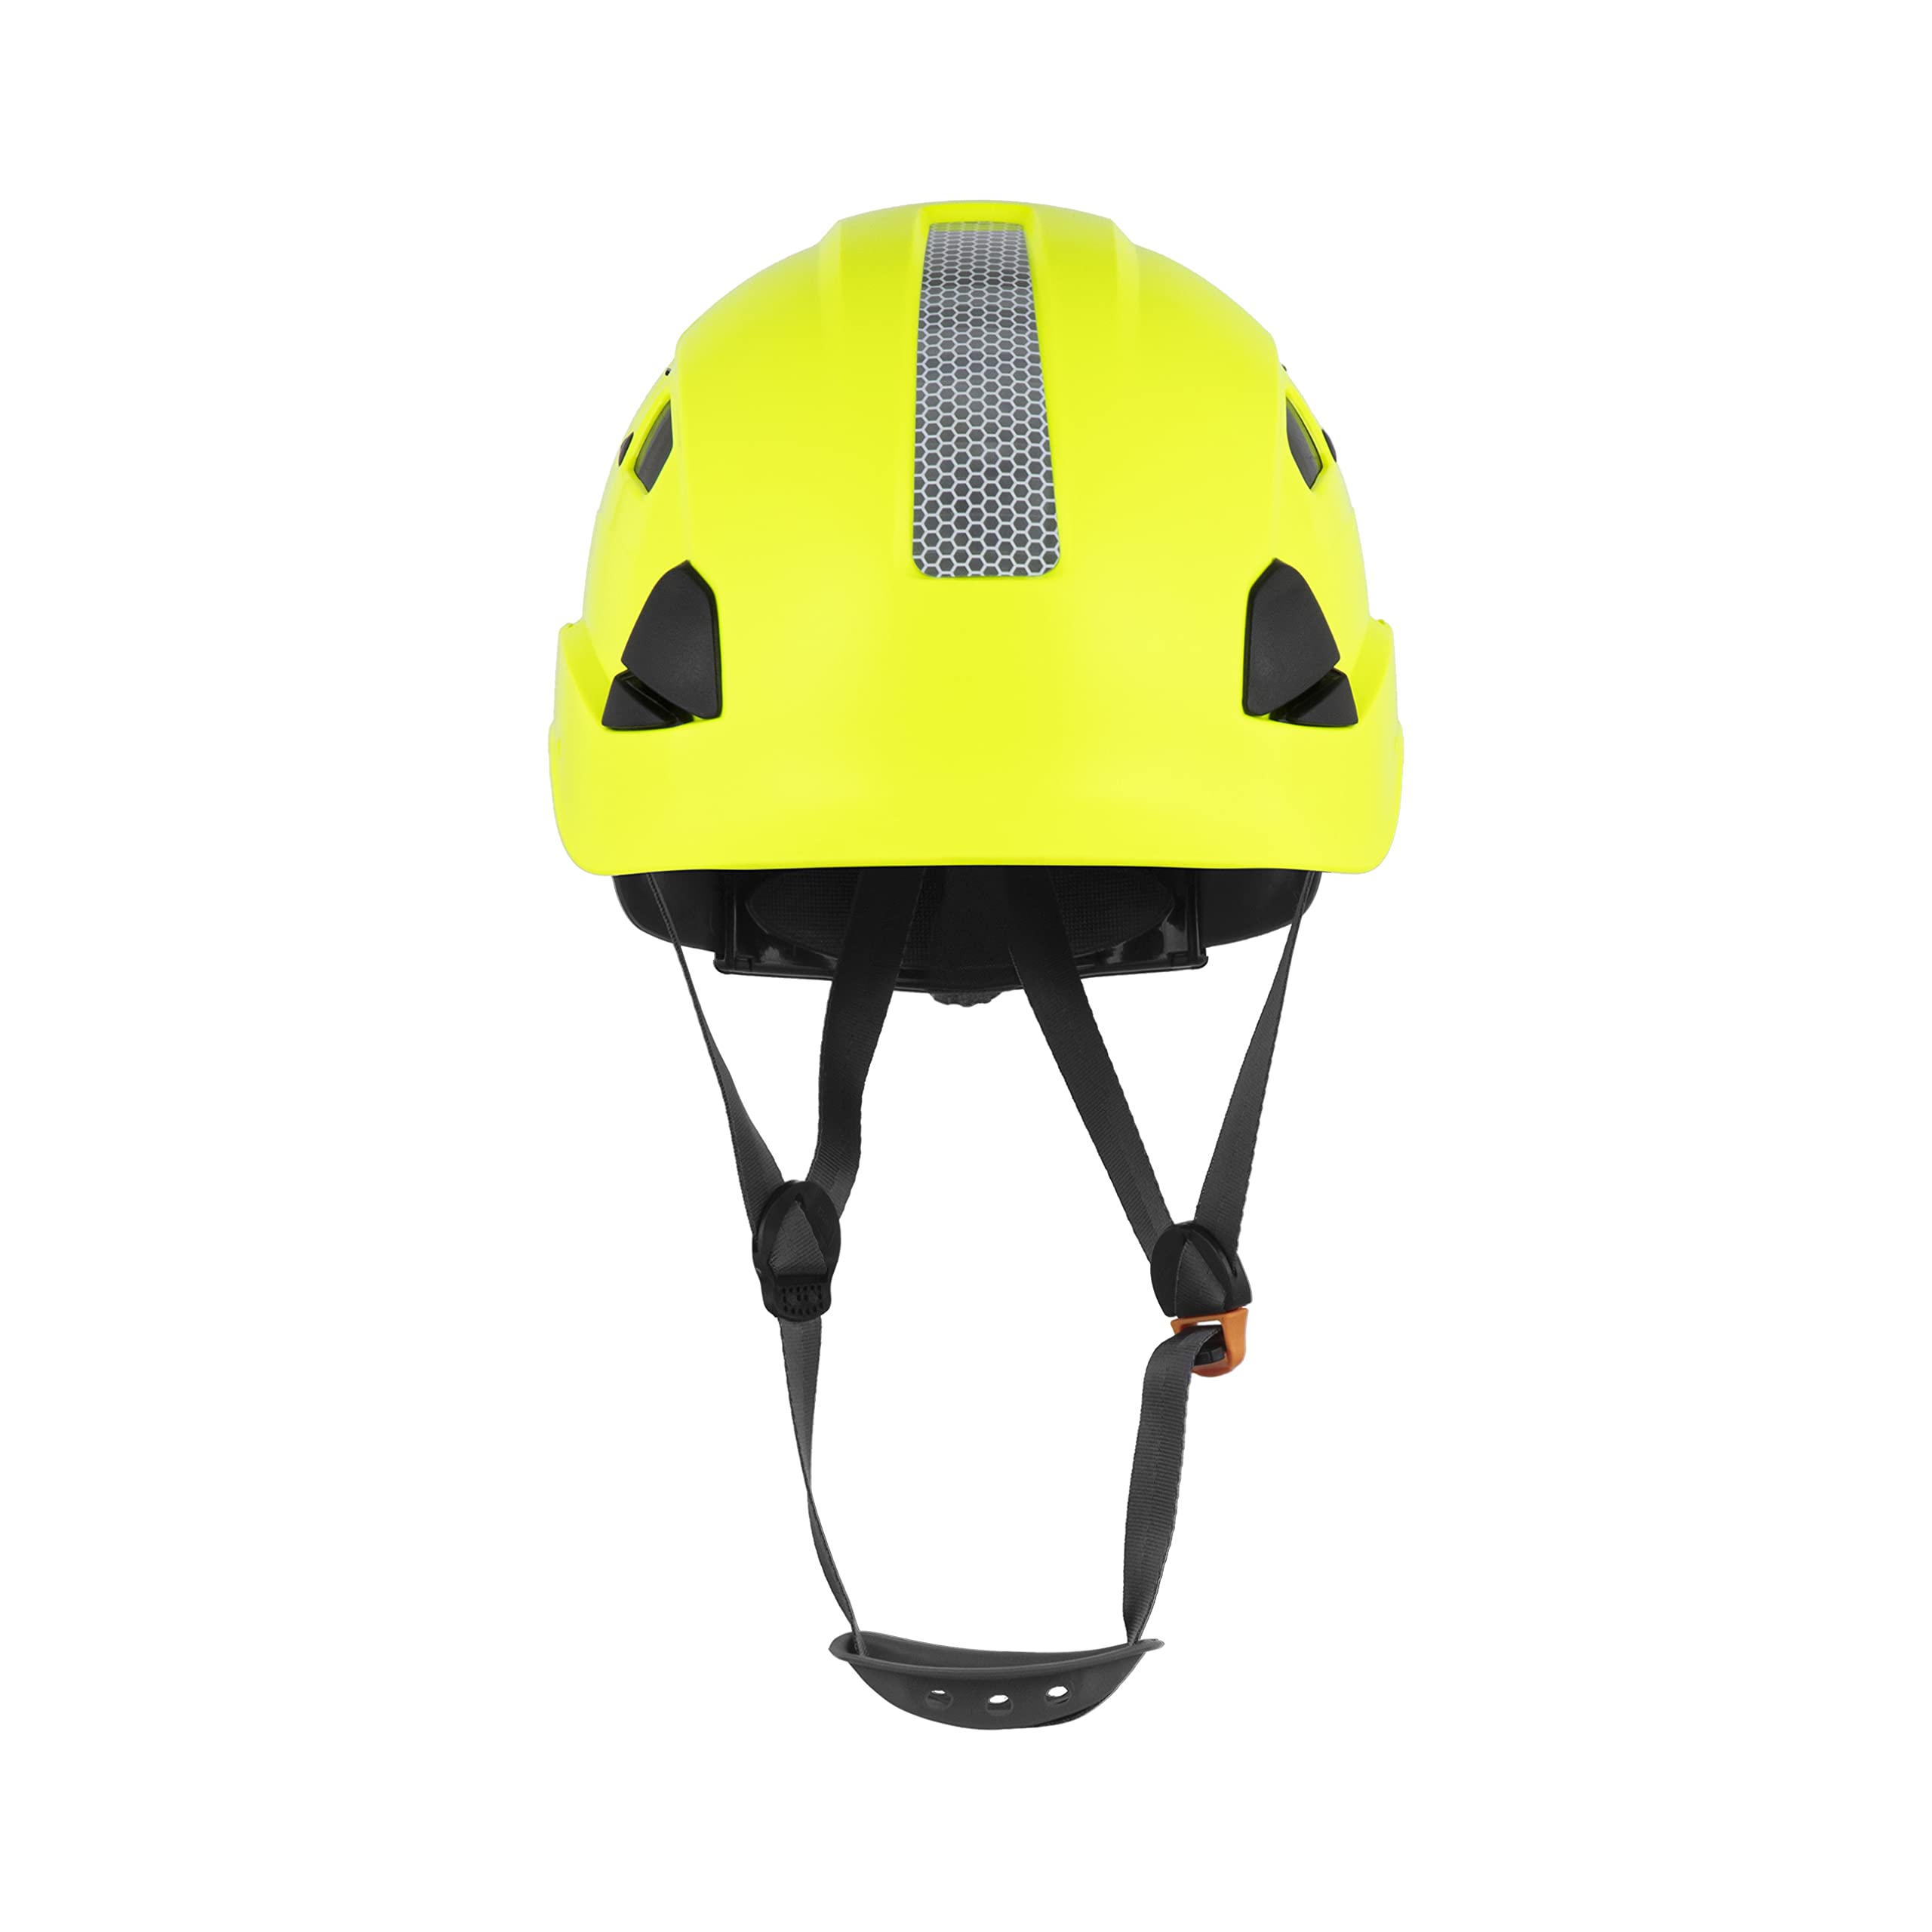 Defender Safety H1-CH Safety Helmet Hard Hat with Visor ANSI Z89.1 (Safety Yellow/w Visor)